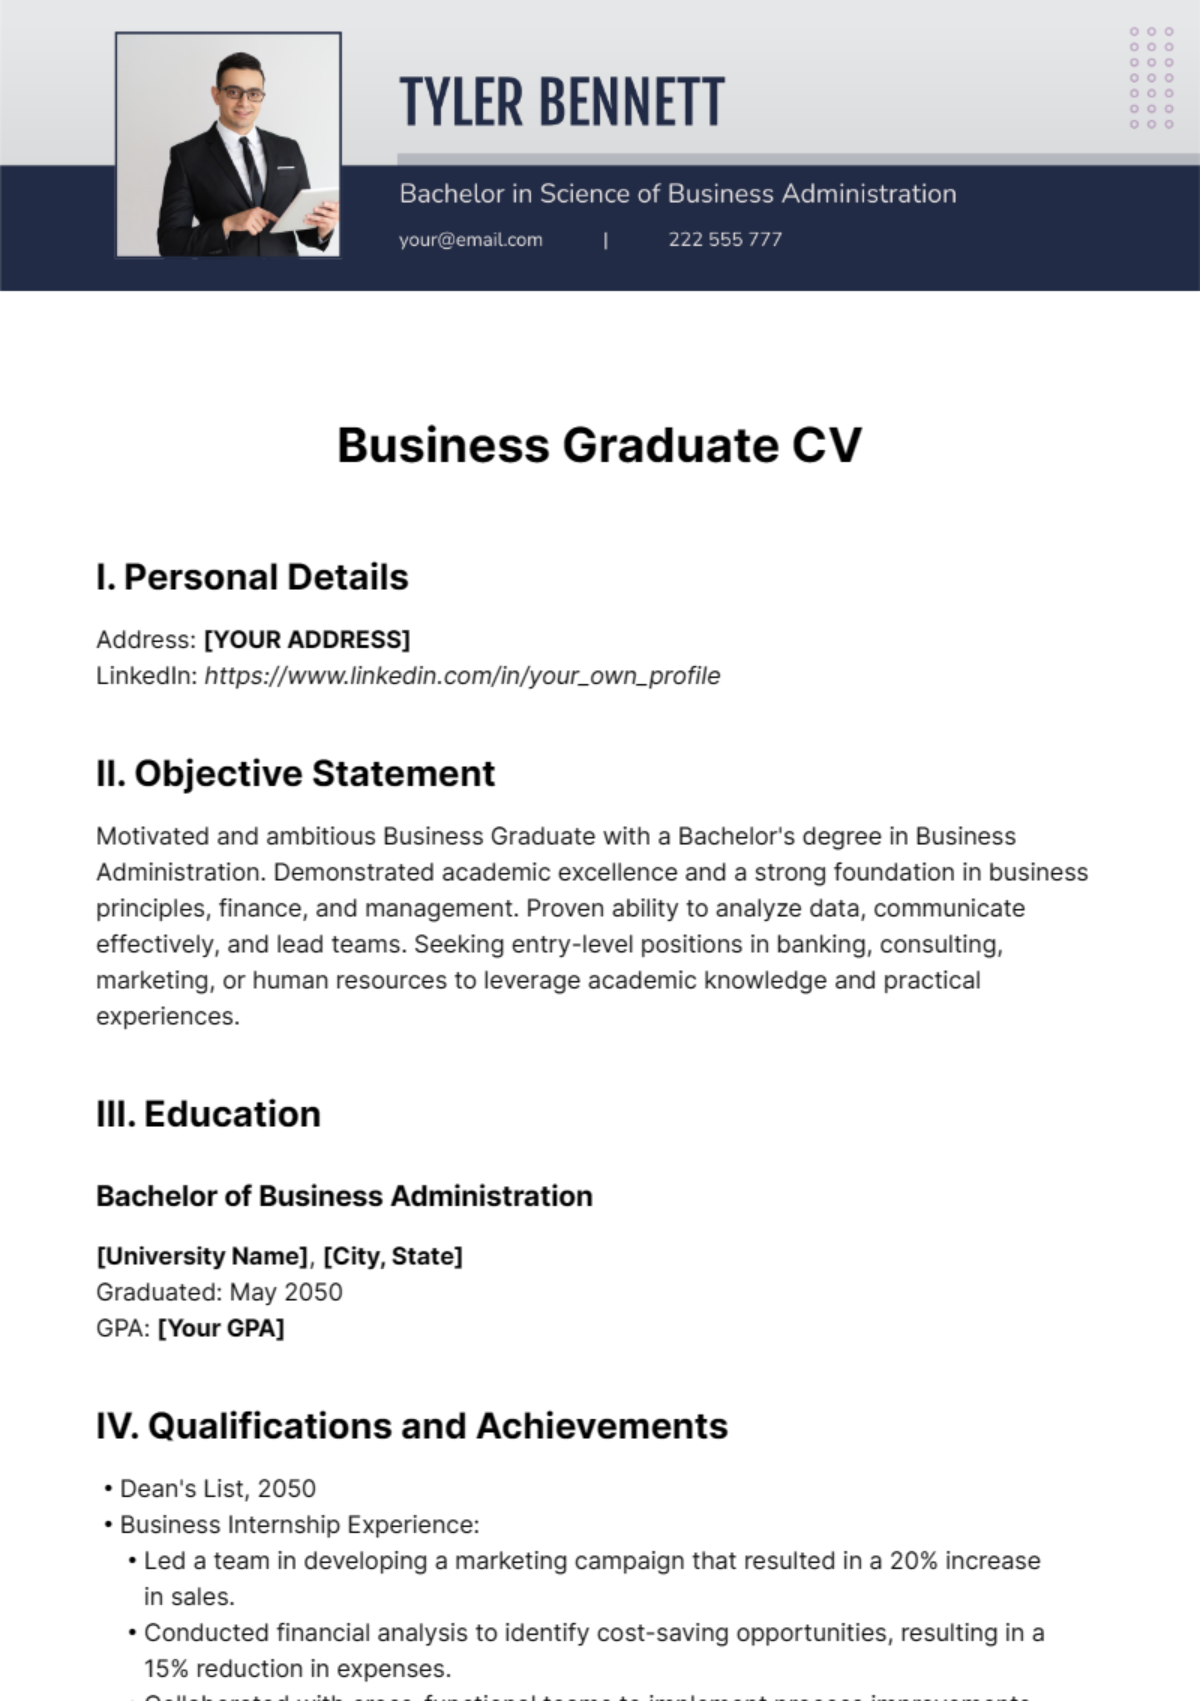 Business Graduate CV Template